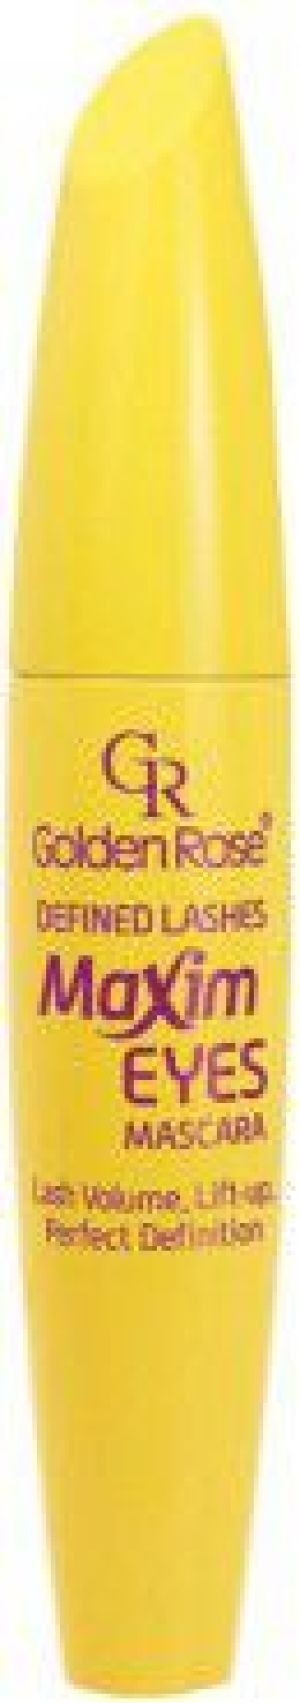 Golden Rose Maxim Eyes Mascara 9.3ml 1